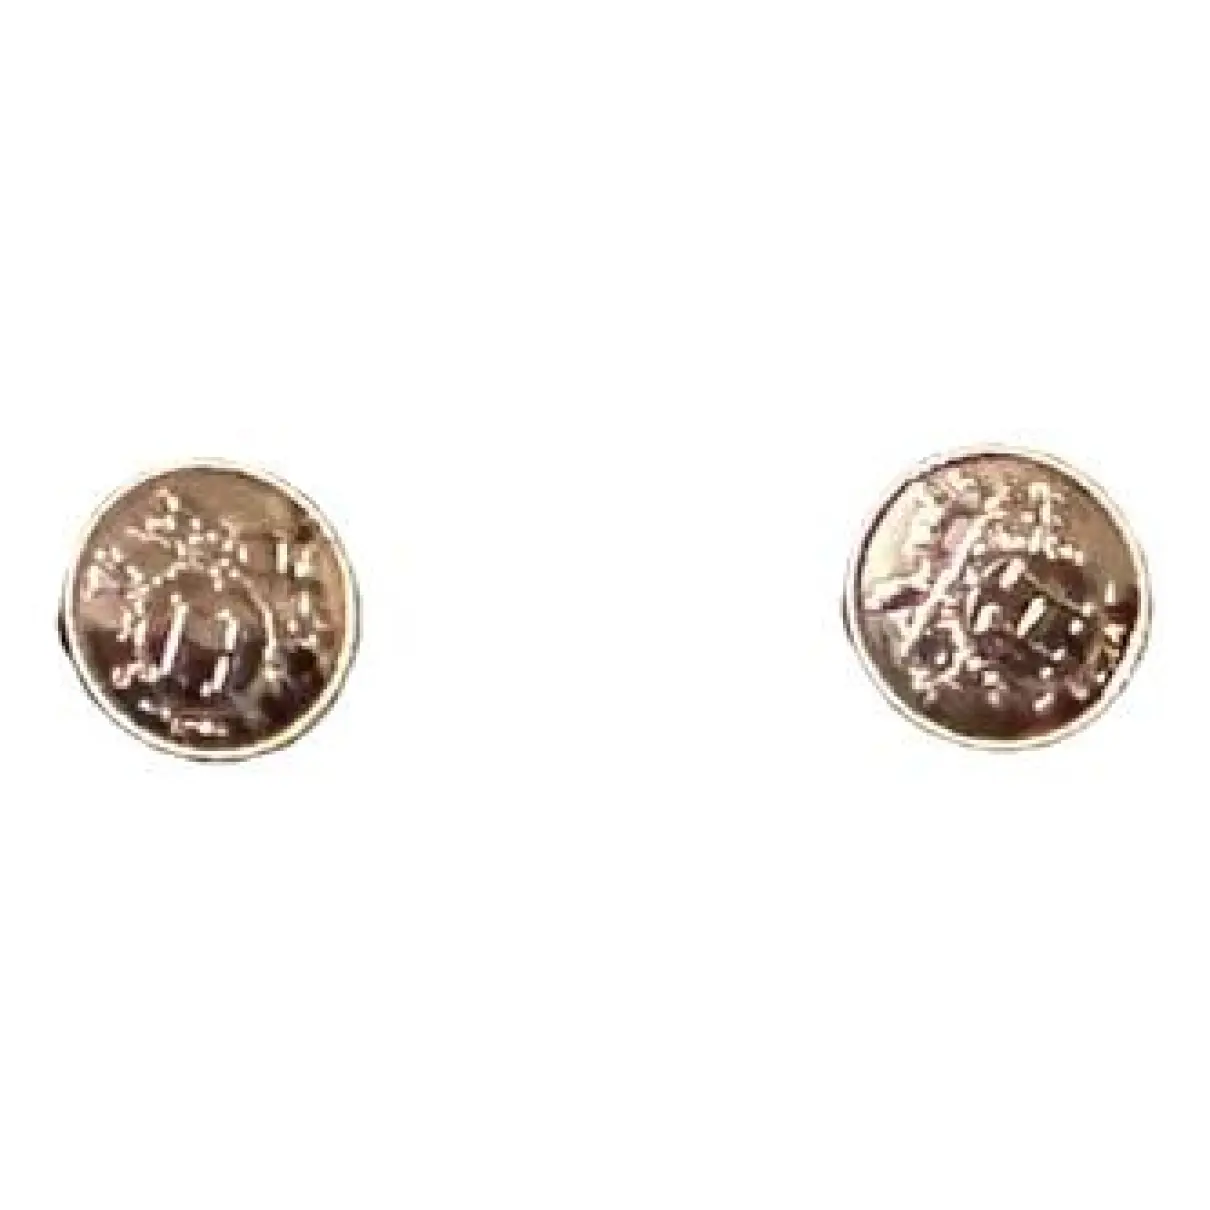 Ex-Libris pink gold earrings